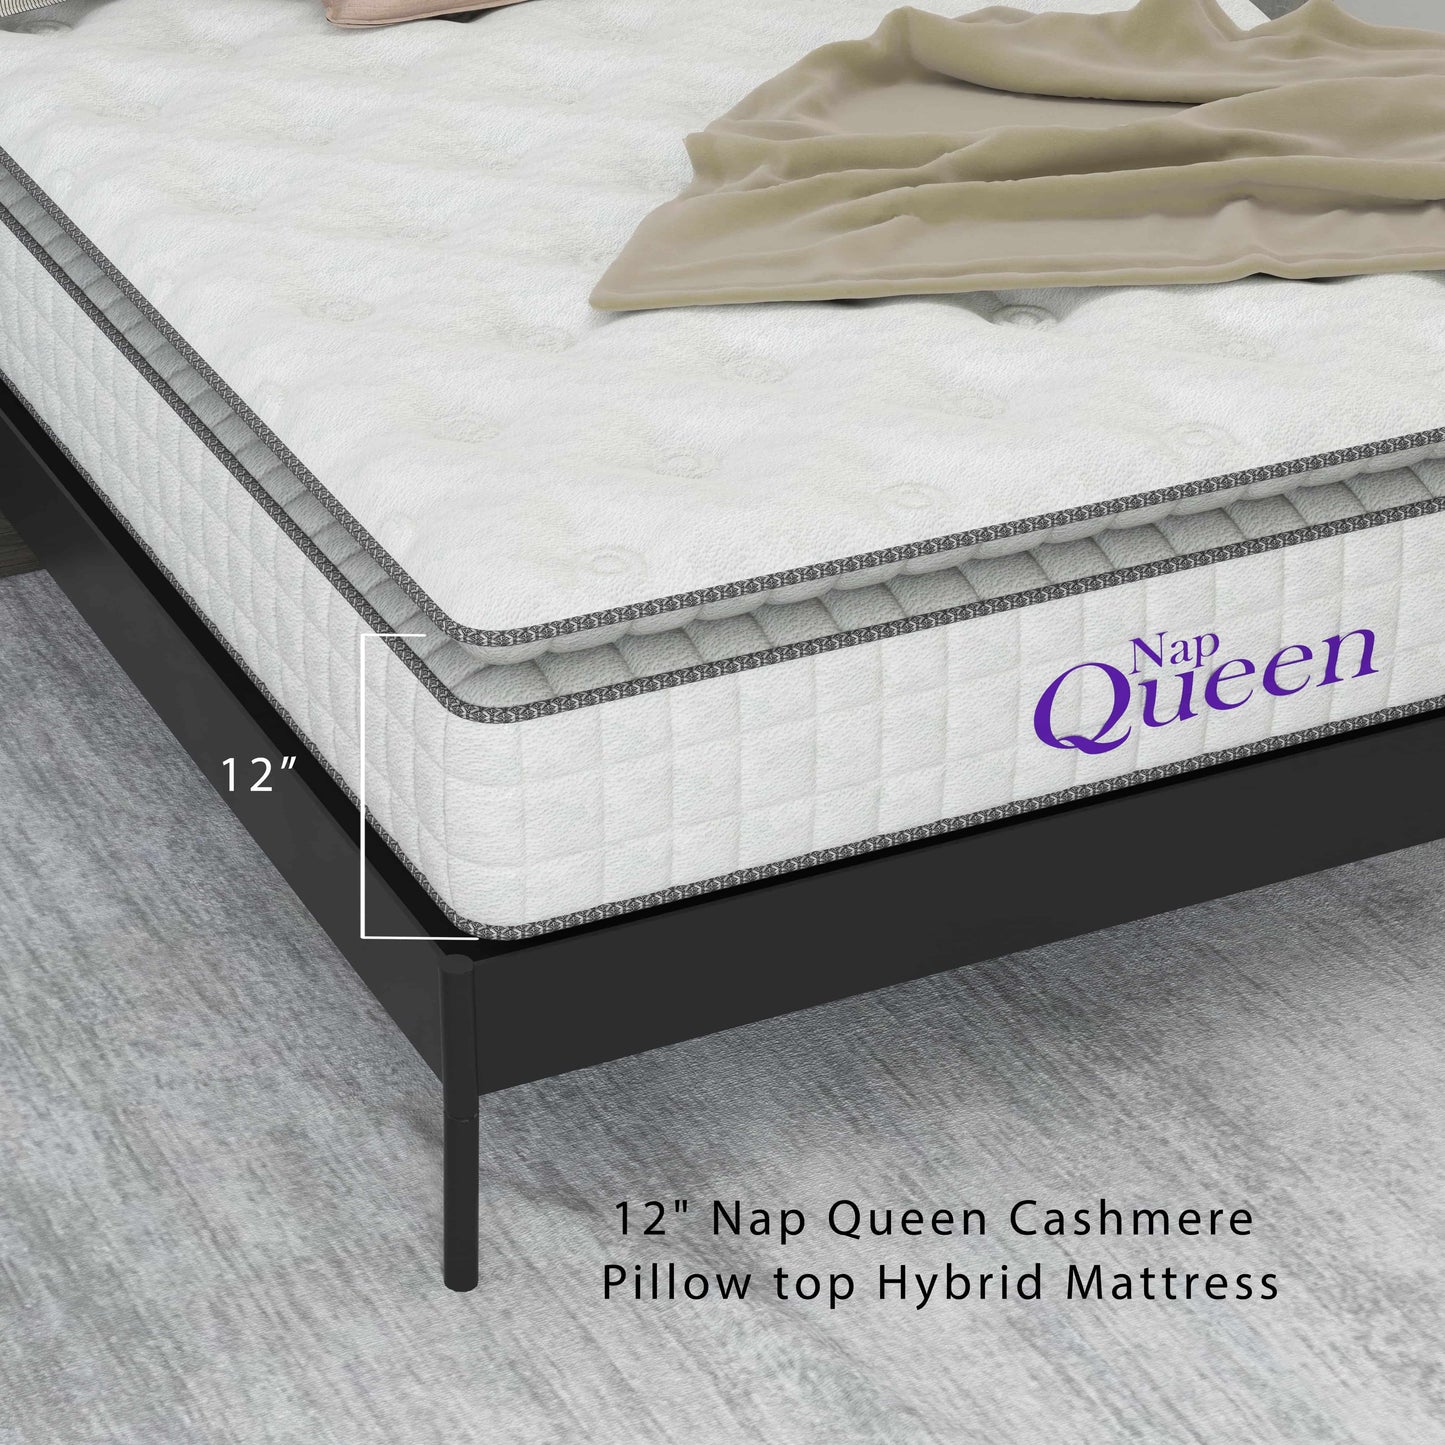 NapQueen Cashmere 12" Hybrid Pillow Top Mattress